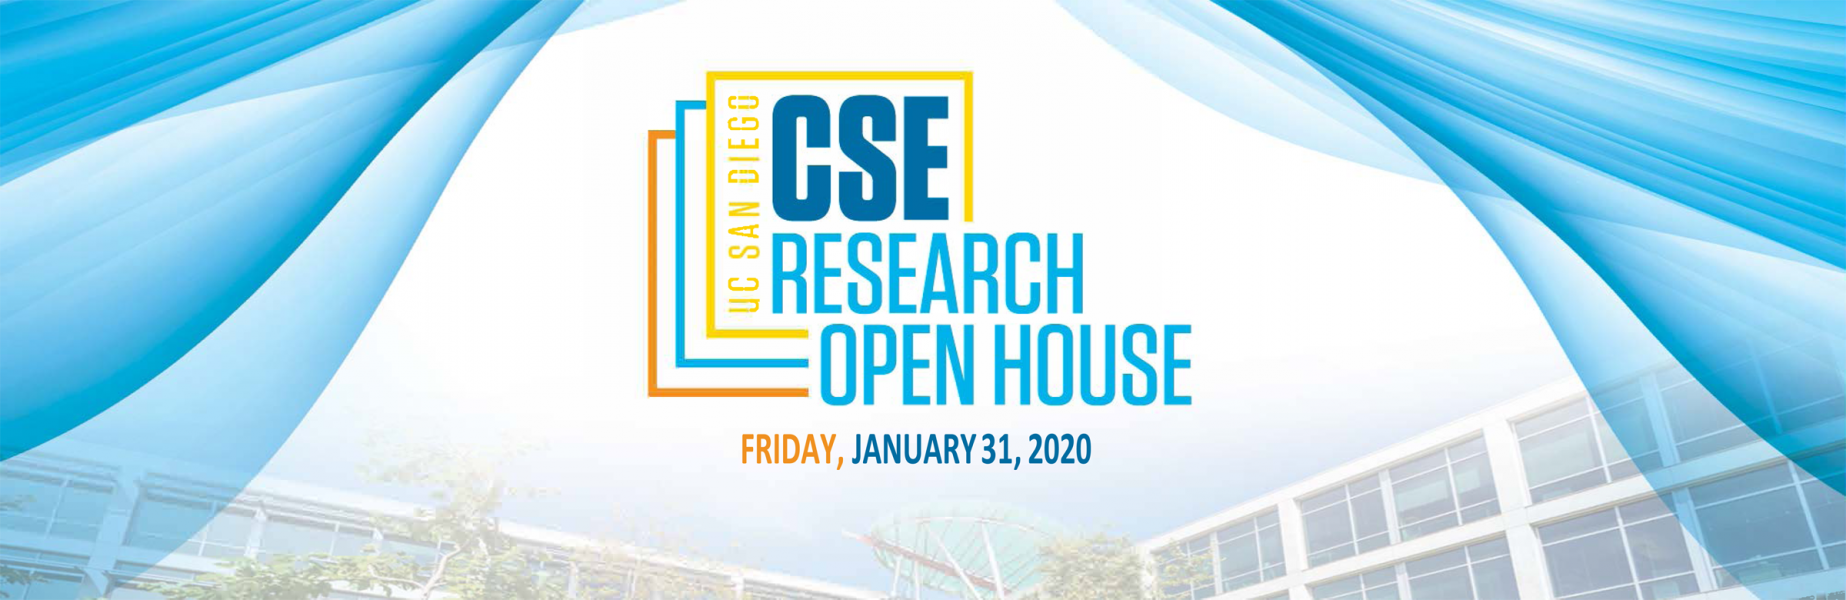 CSE Open House Open 2020